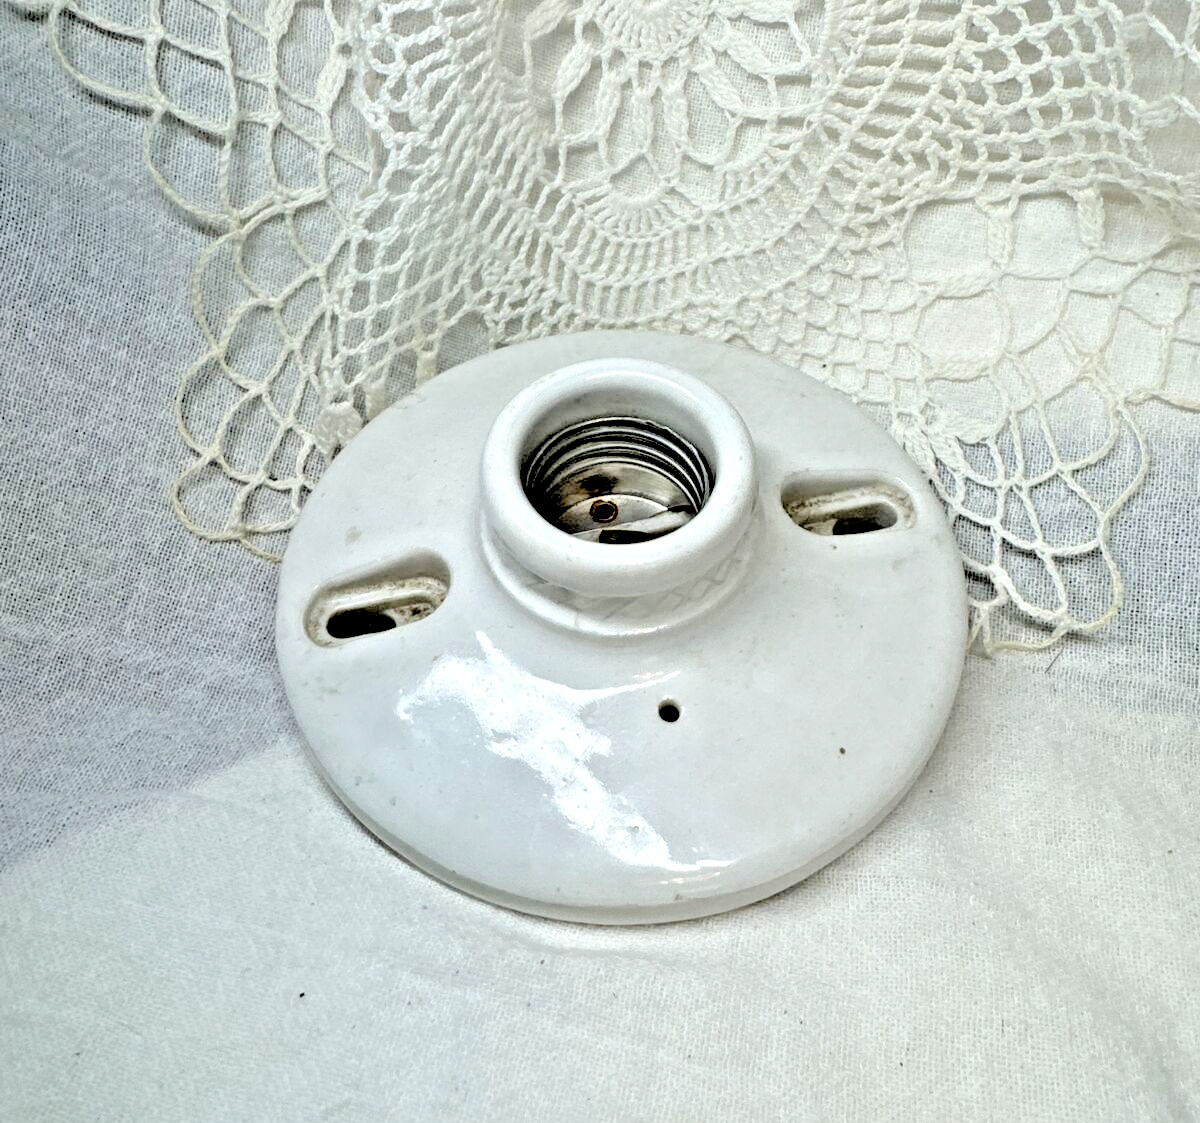 Vintage Leviton Ceramic Porcelain Light Socket Fixture, 9875-X, Made in U.S.A.